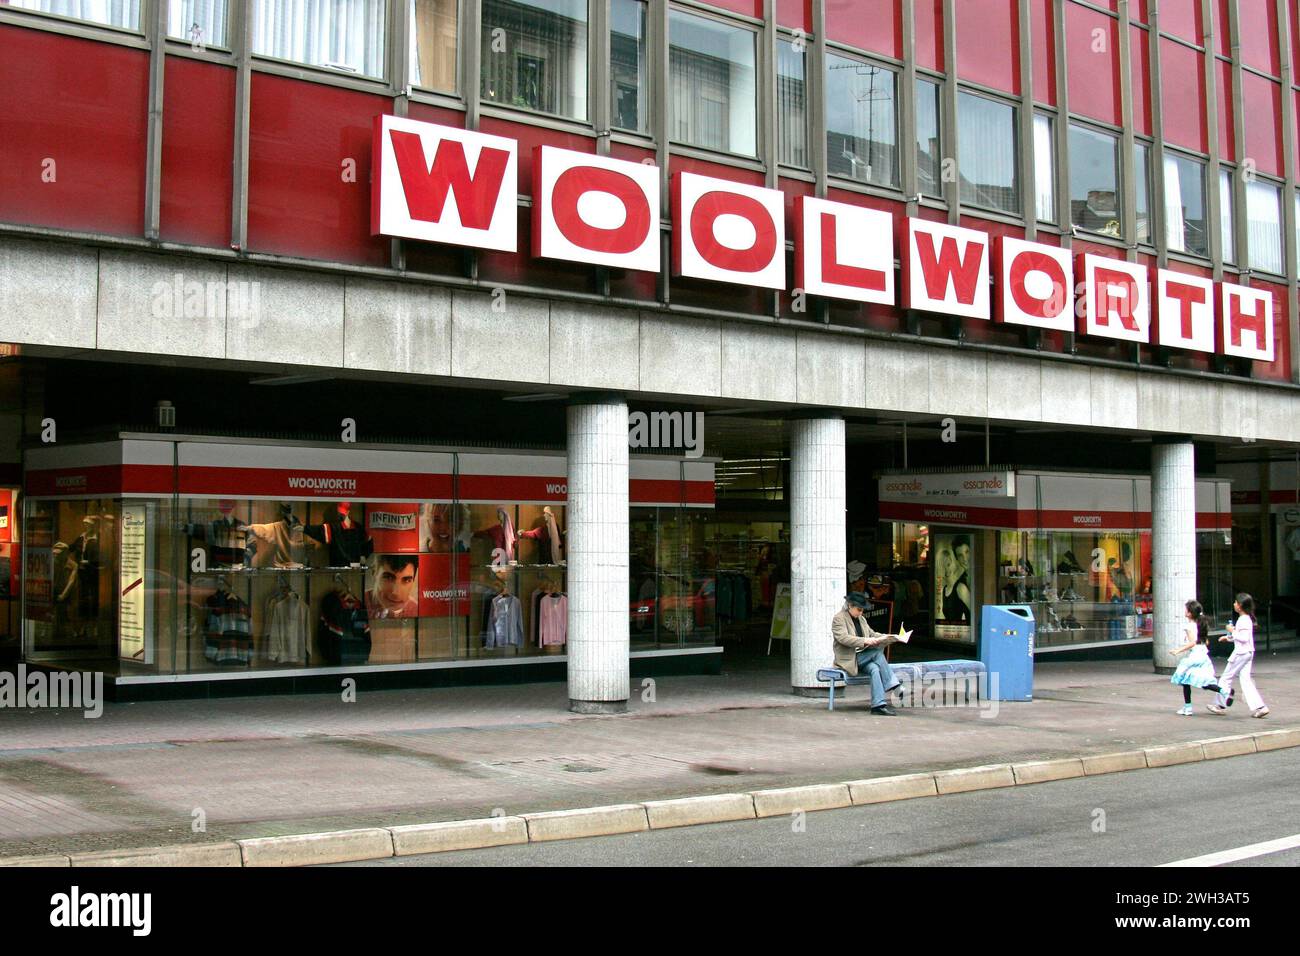 Woolwoth Warenhaus in Voelklingen / Saarland  Foto: Thomas Wieck  V e r oe f f e n t l i c h u n g   n u r  m i t  N a m e   u n d   H o n o r a r z a Stock Photo